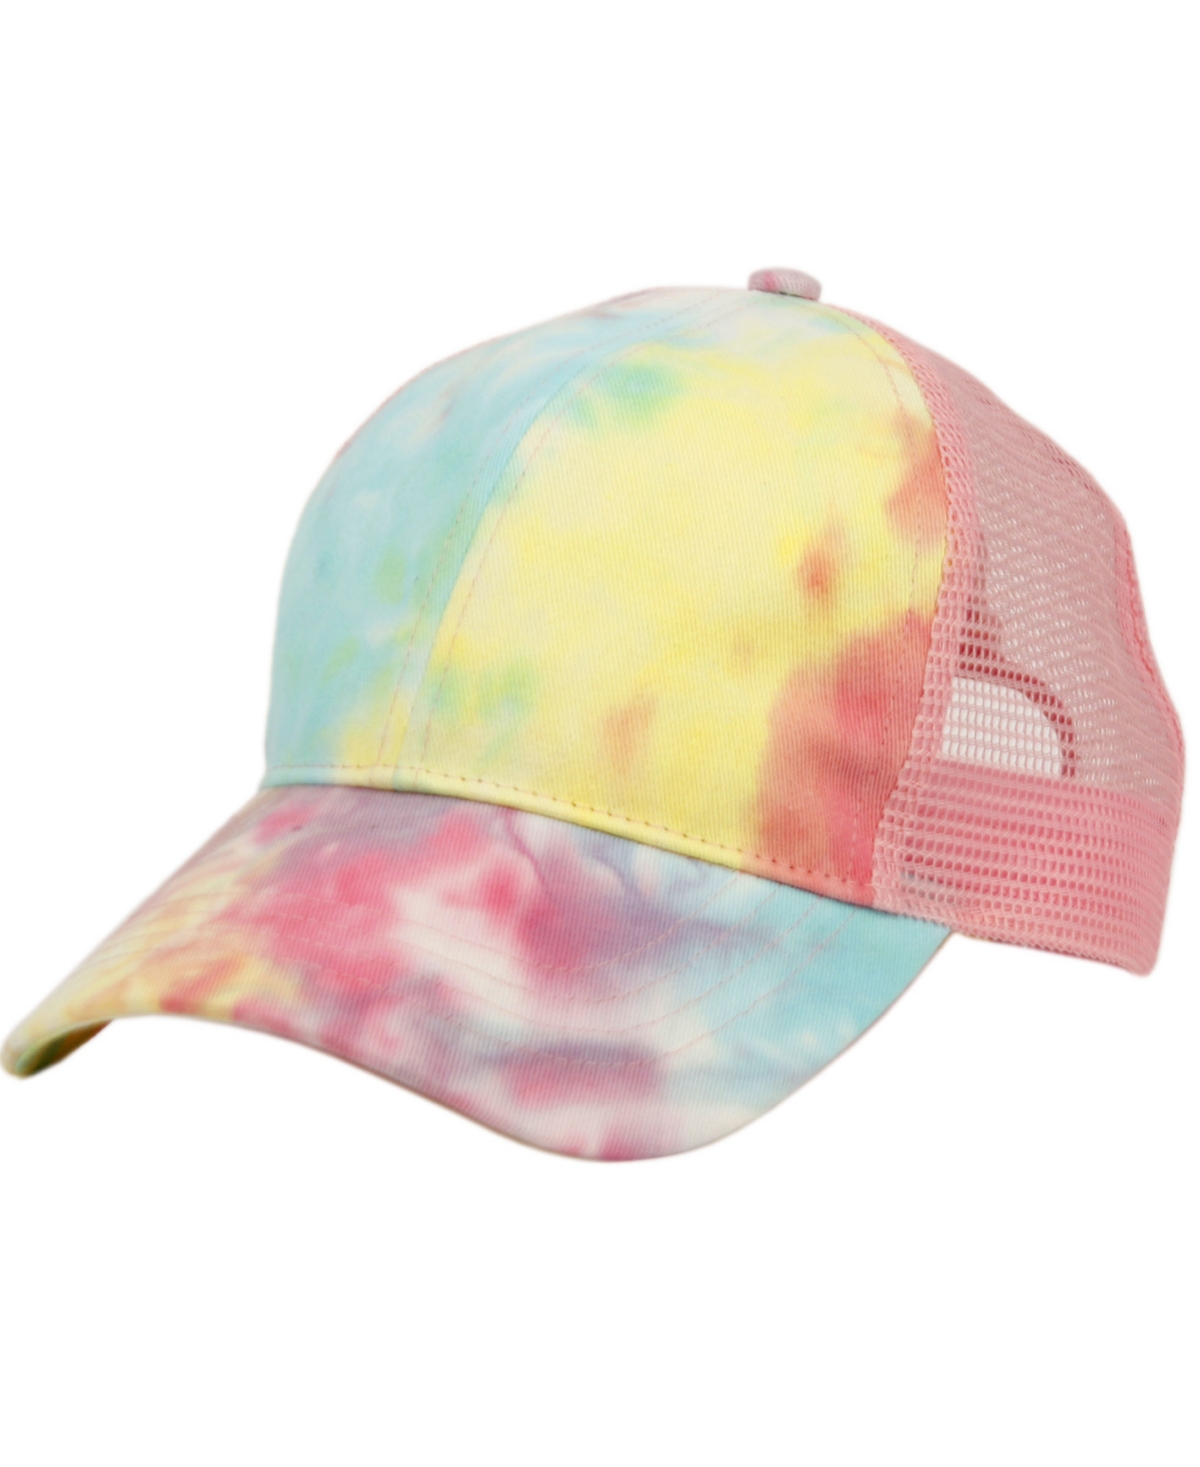 Women's Ponytail Messy Buns Tie Dye Truck Mesh Ponycap Hat - Mix Light Pink